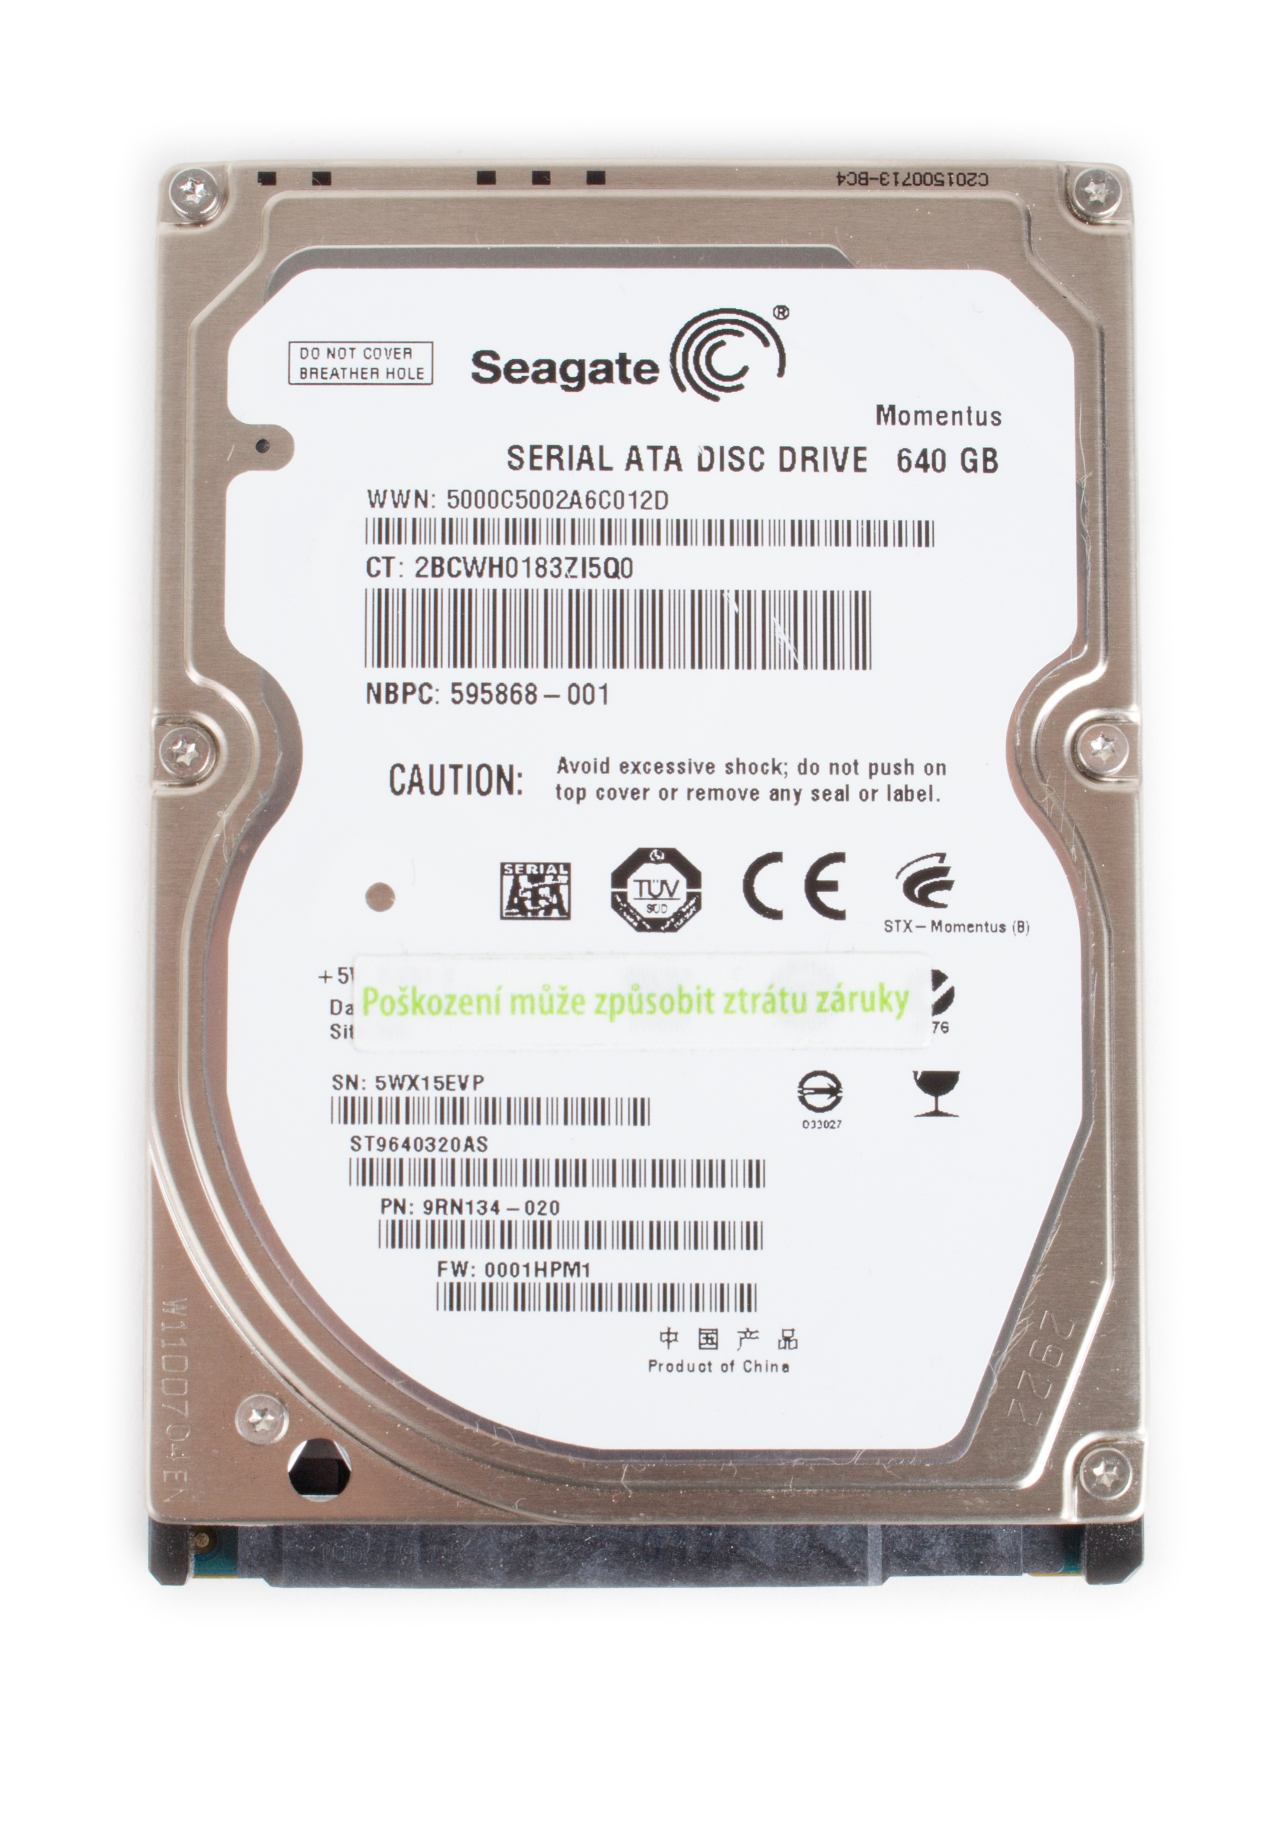 Seagate Serial ATA Momentus HDD 640 GB 